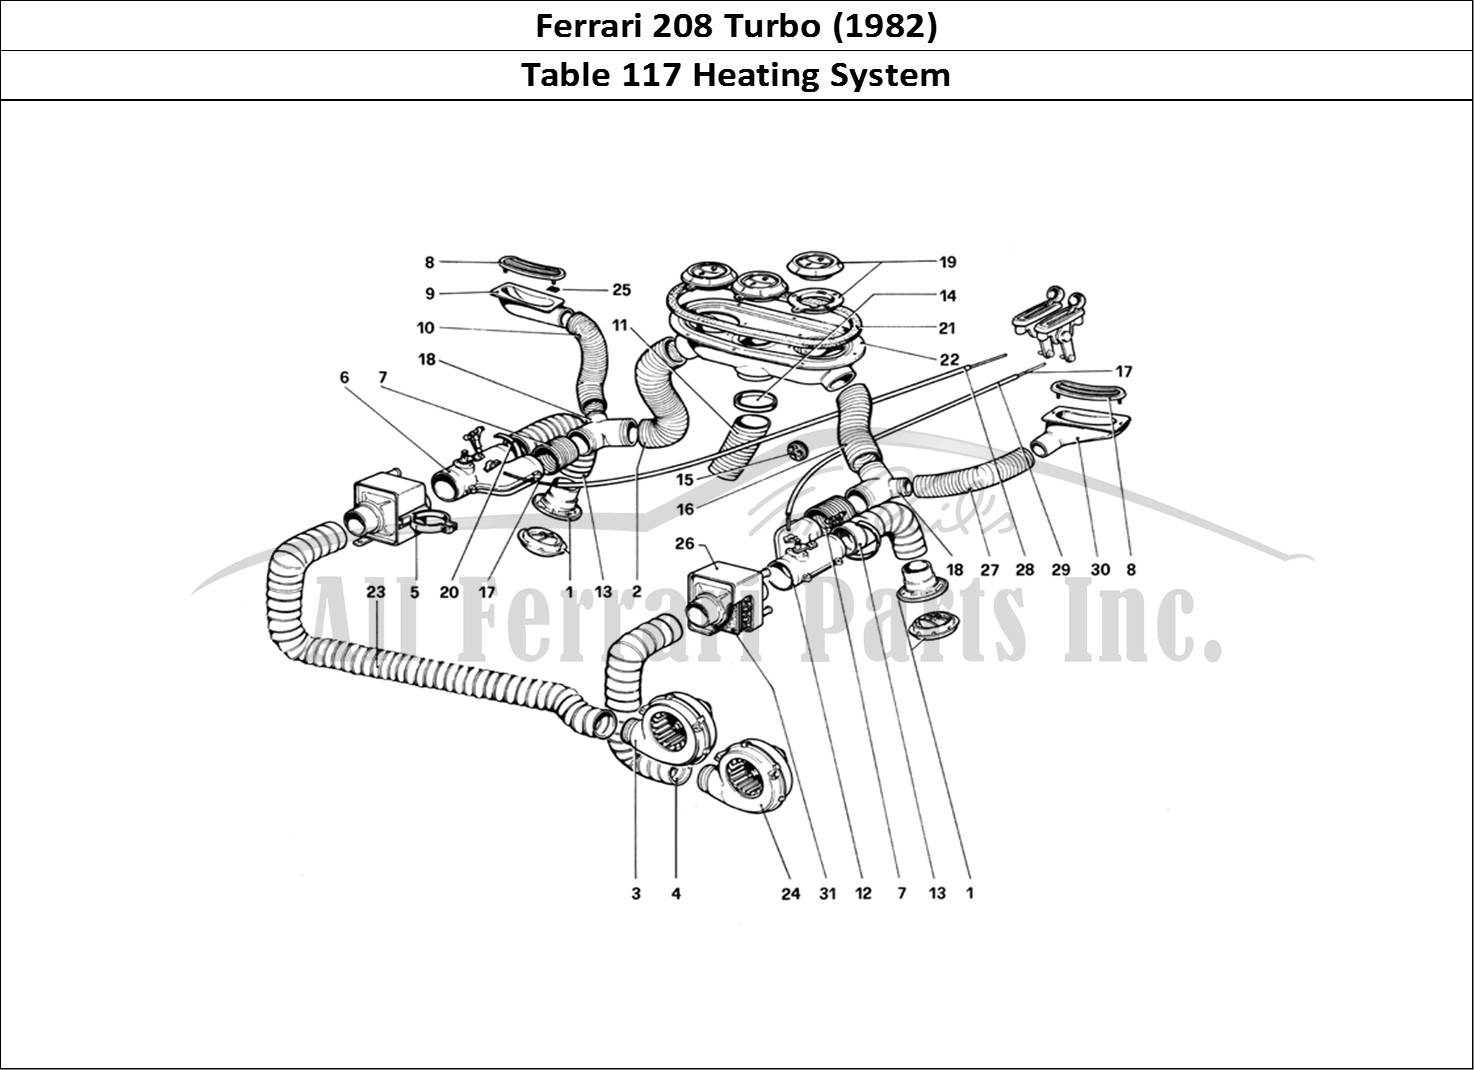 Ferrari Parts Ferrari 208 Turbo (1982) Page 117 Heating System